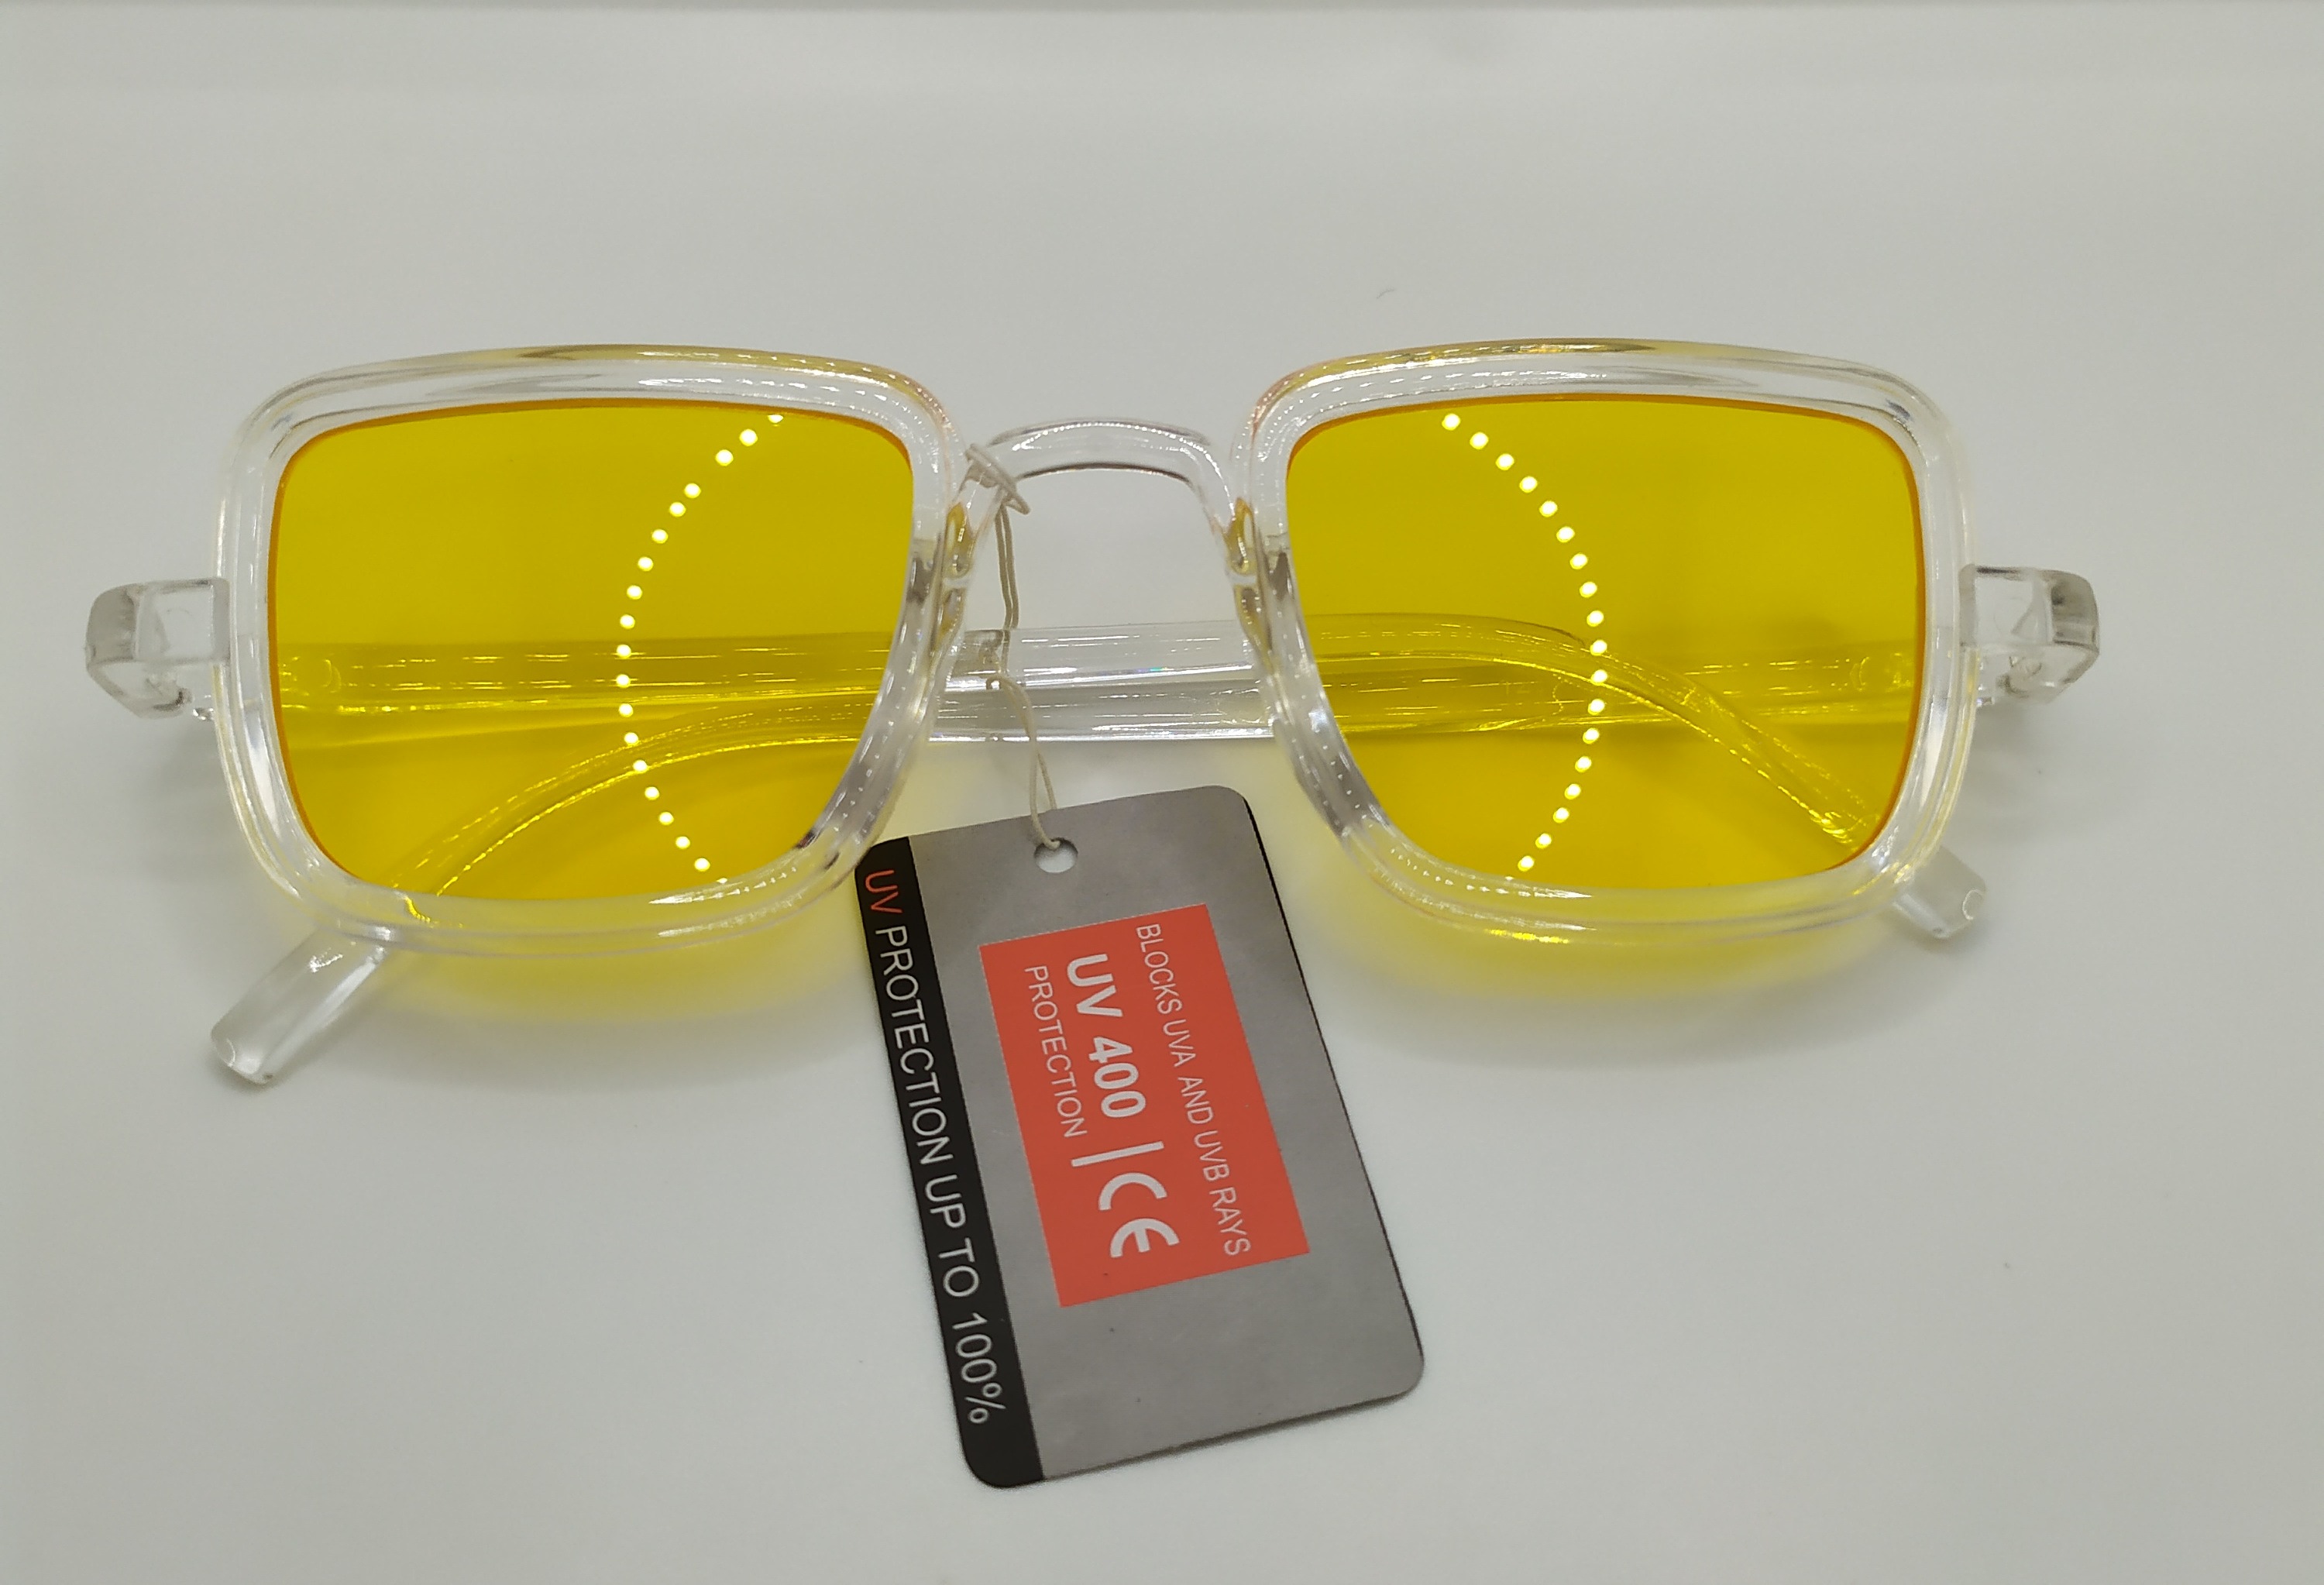 sg02 แว่นกันแดดกรอบใส เลนส์สีเหลือง    แถมฟรีซองใส่แว่นและผ้าเช็ดแว่น